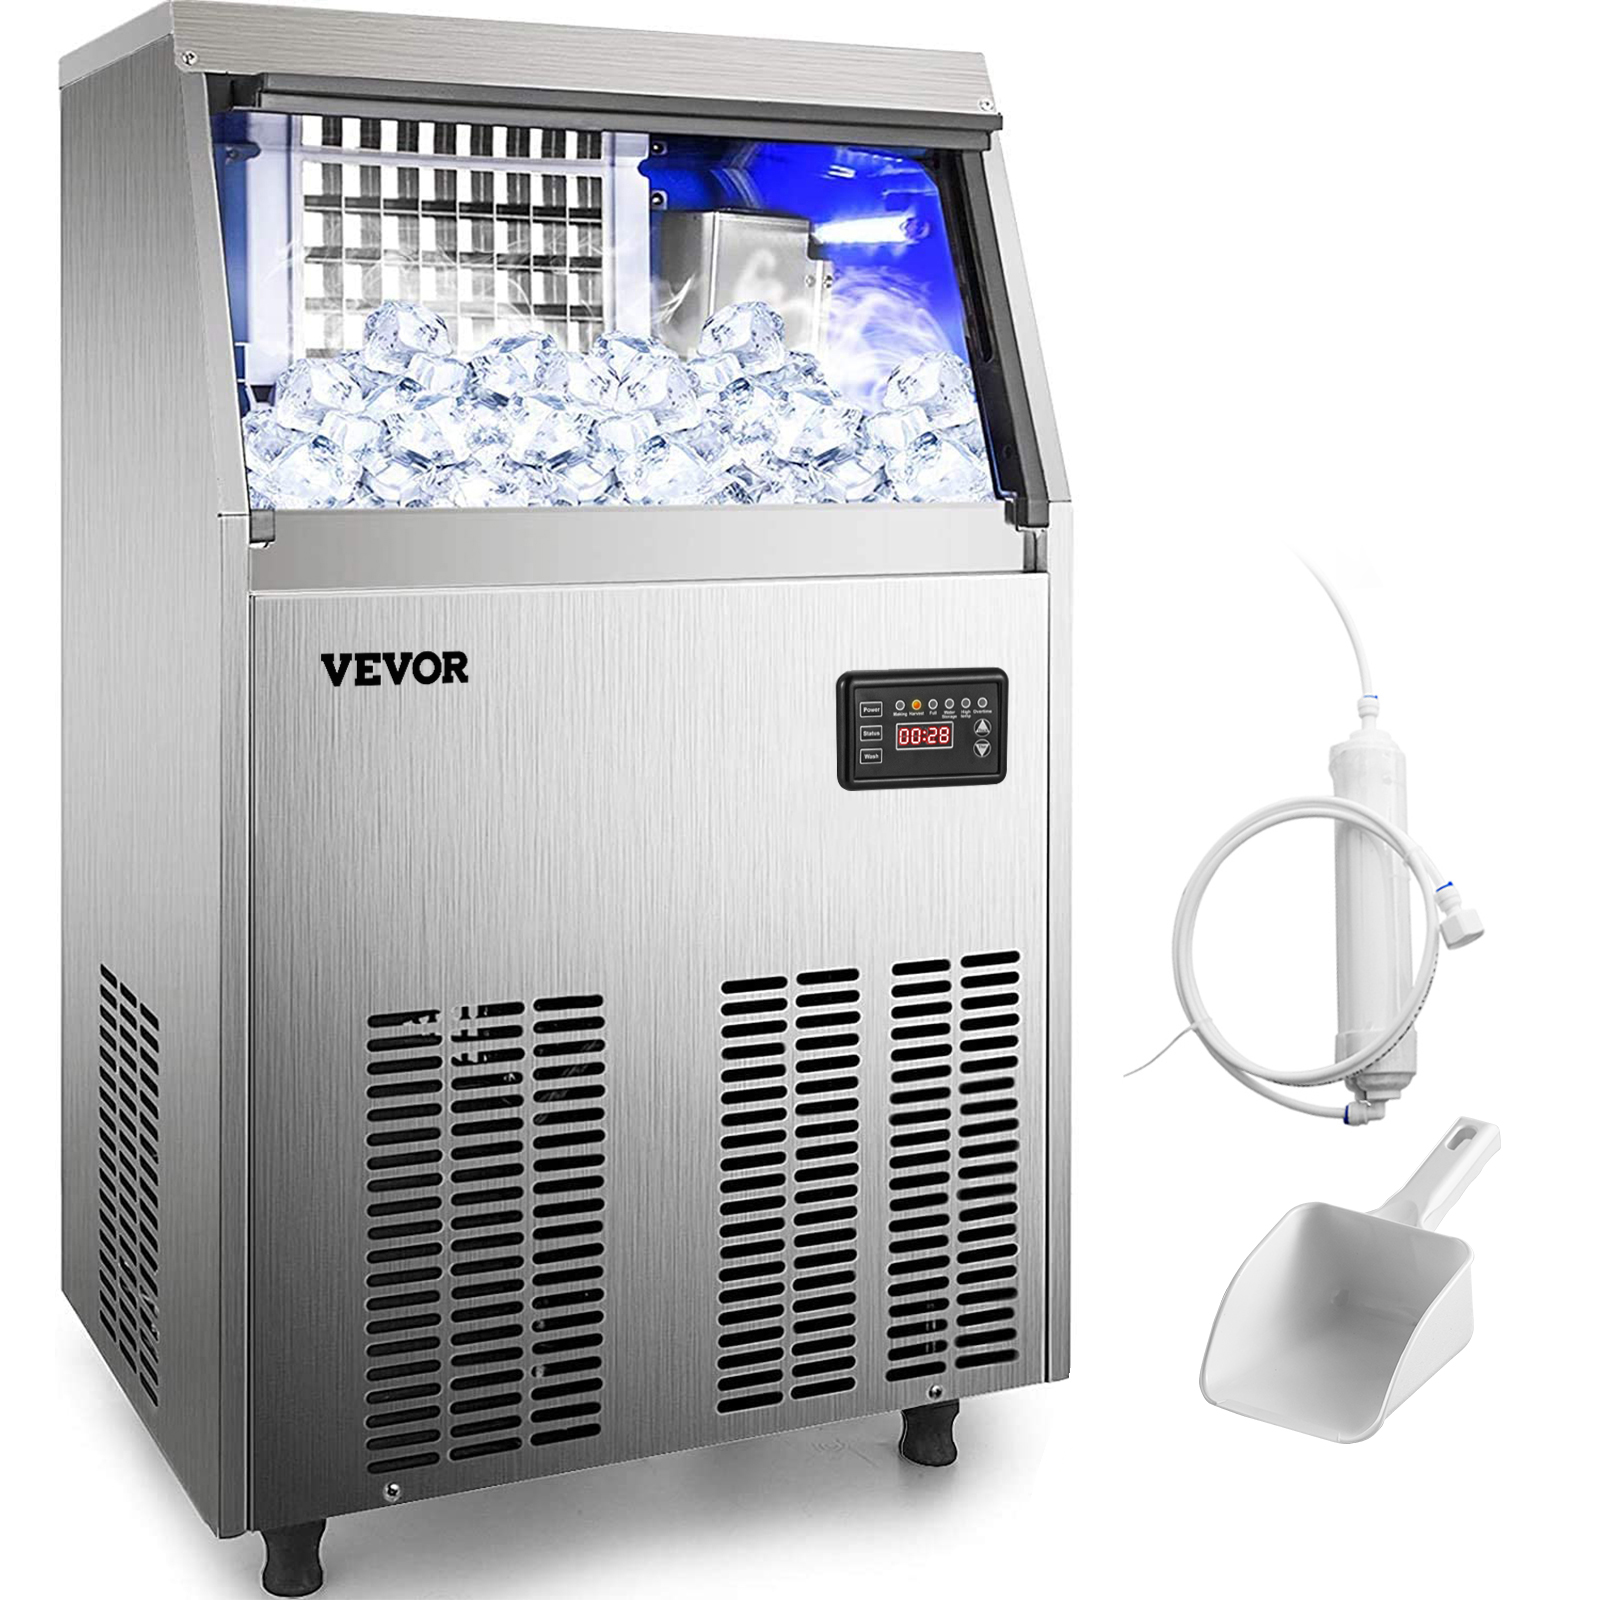 Vevor 150lbs Built-in Commercial Ice Maker Ice Cube Maker Machine Bar Restaurant от Vevor Many GEOs